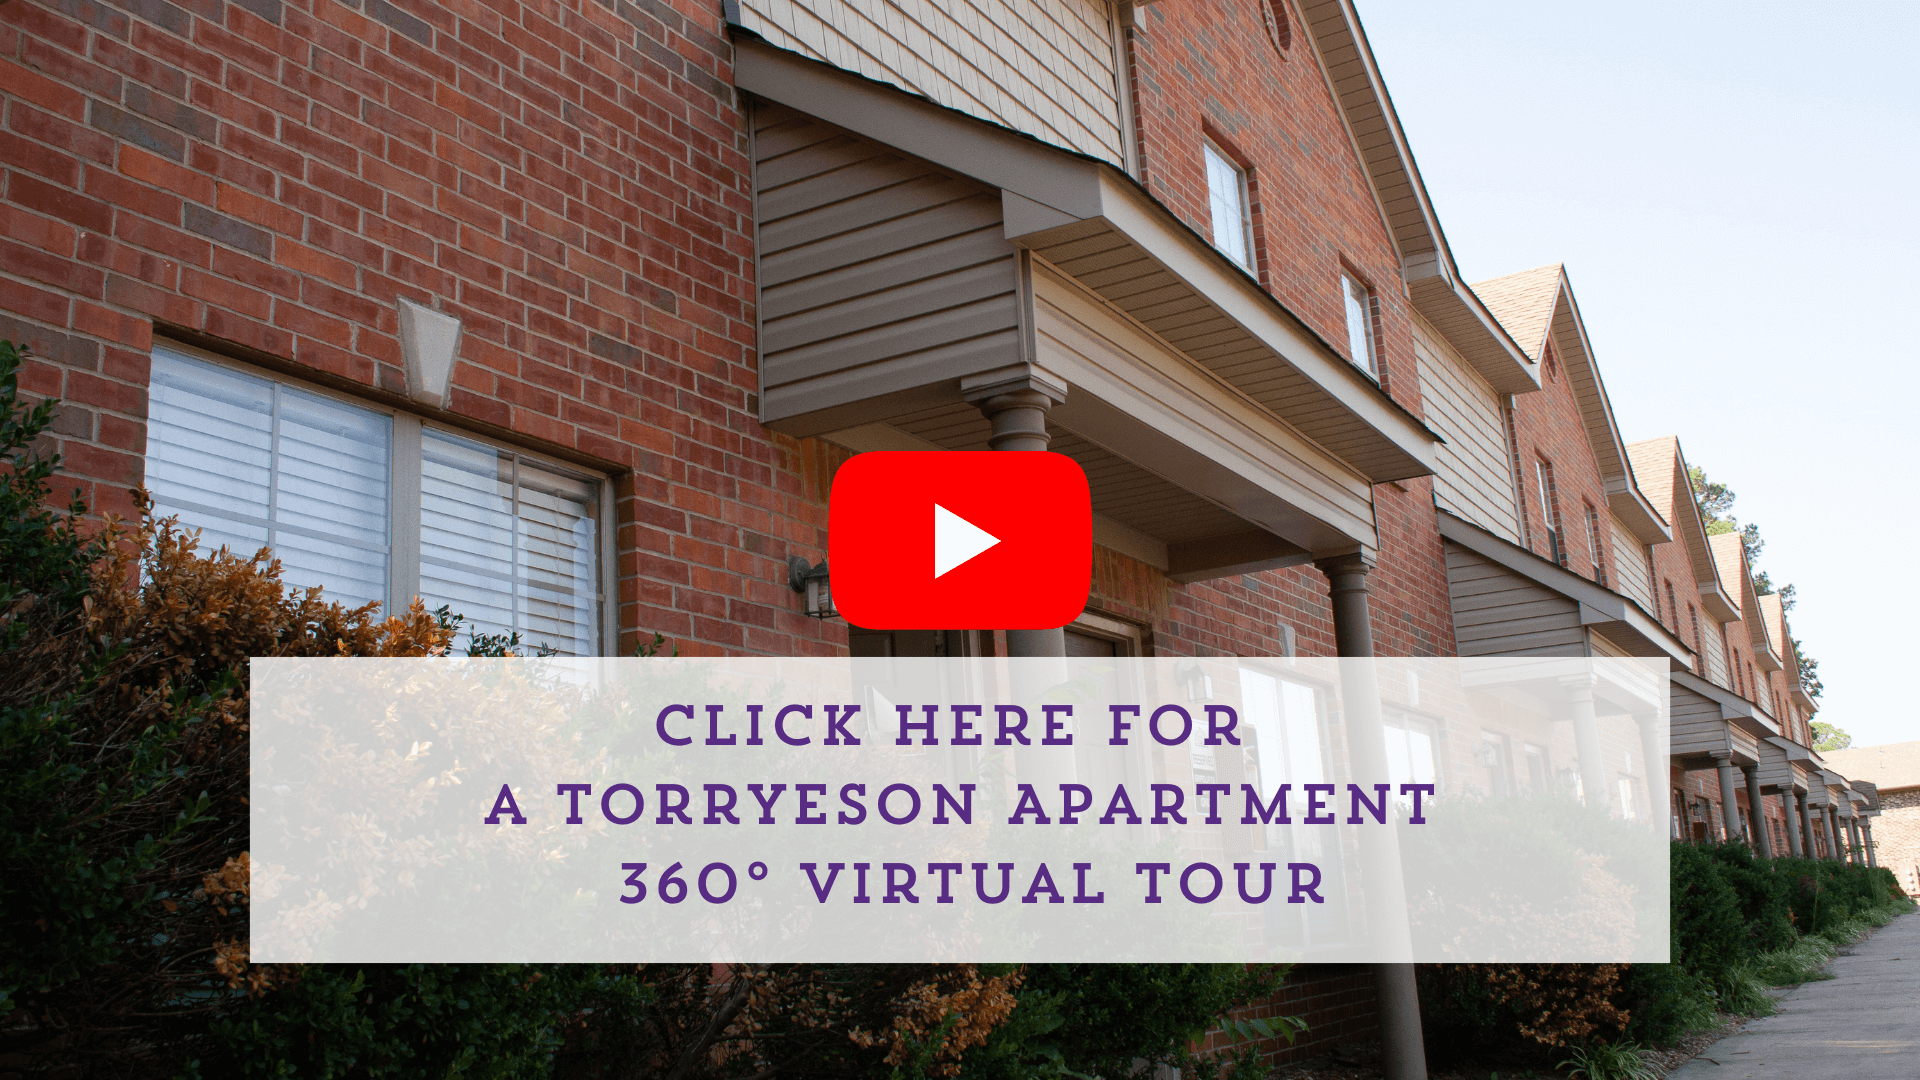 Alt text: click here for a torreyson apartment 360 degree virtual tour